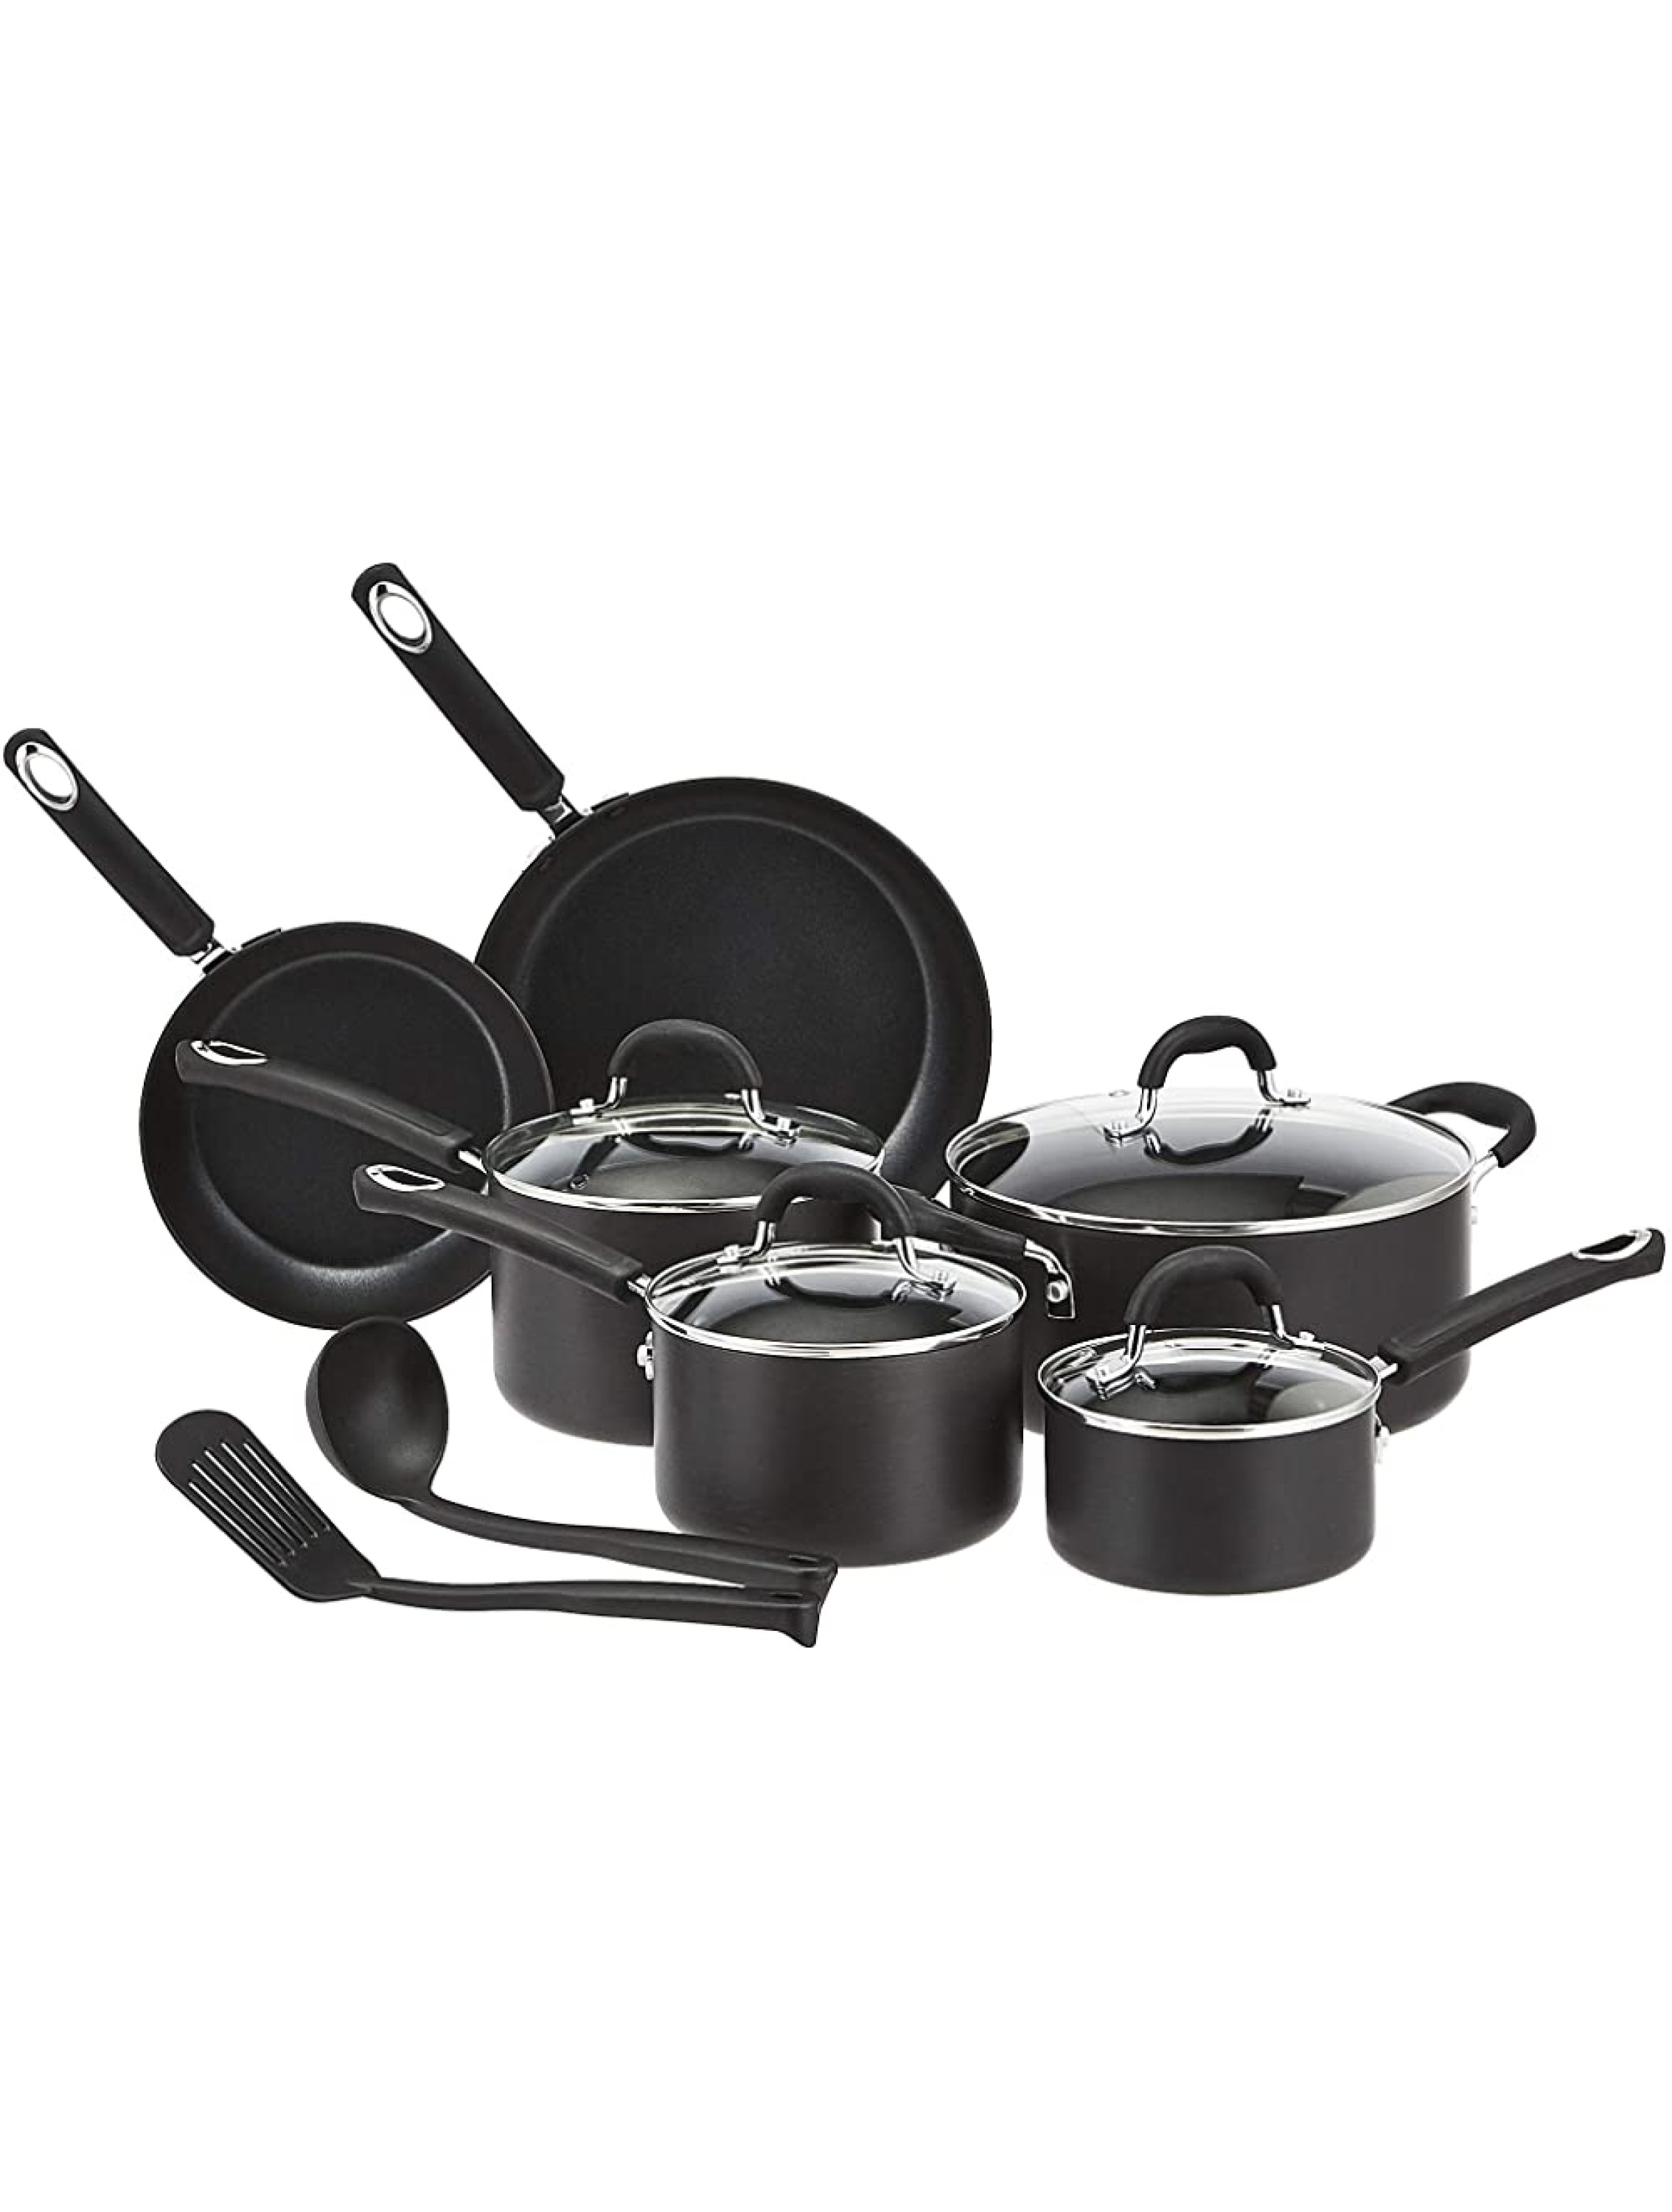 Basics Hard Anodized Non-Stick 12-Piece Cookware Set Black Pots Pans and Utensils - BL33U3DR5